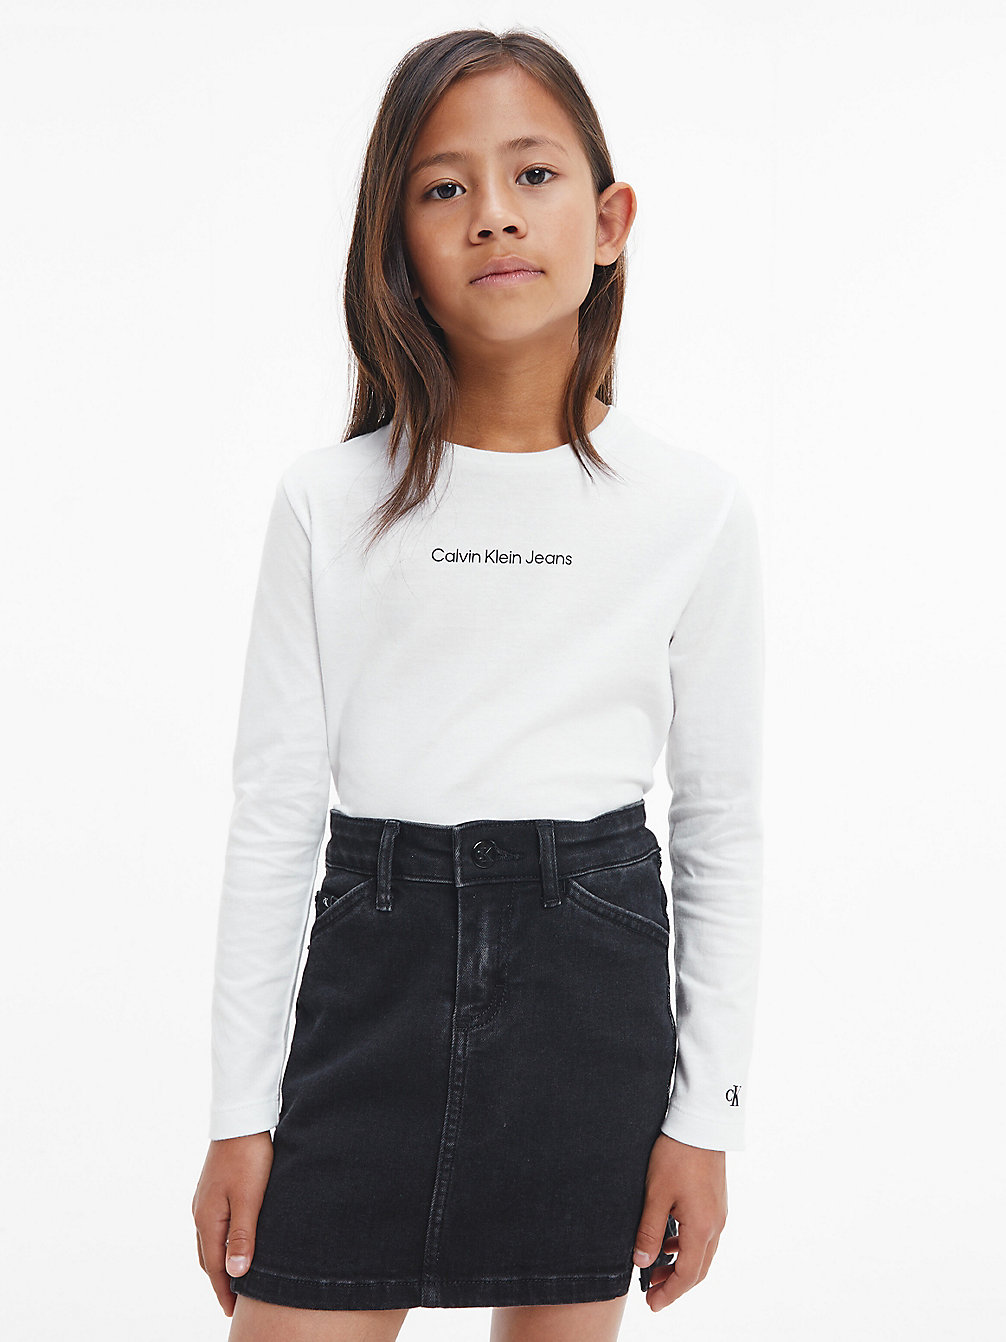 BRIGHT WHITE Organic Cotton Long Sleeve T-Shirt undefined girls Calvin Klein